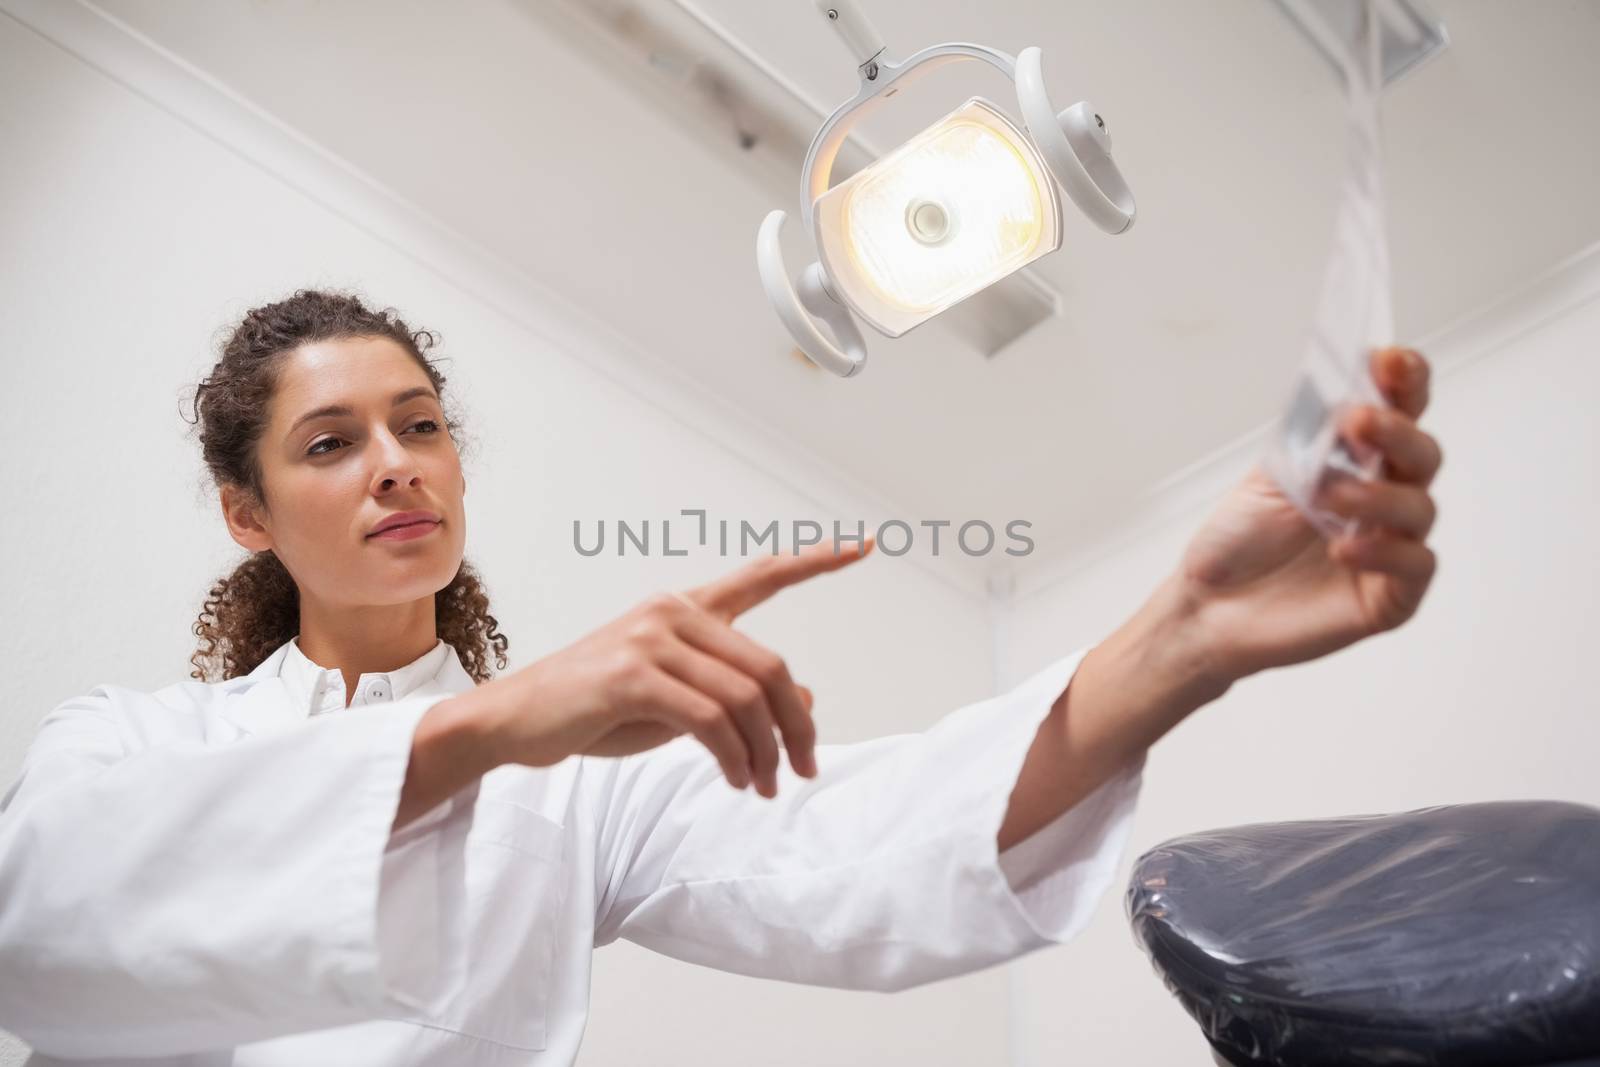 Dentist examining xrays and pointing to them by Wavebreakmedia